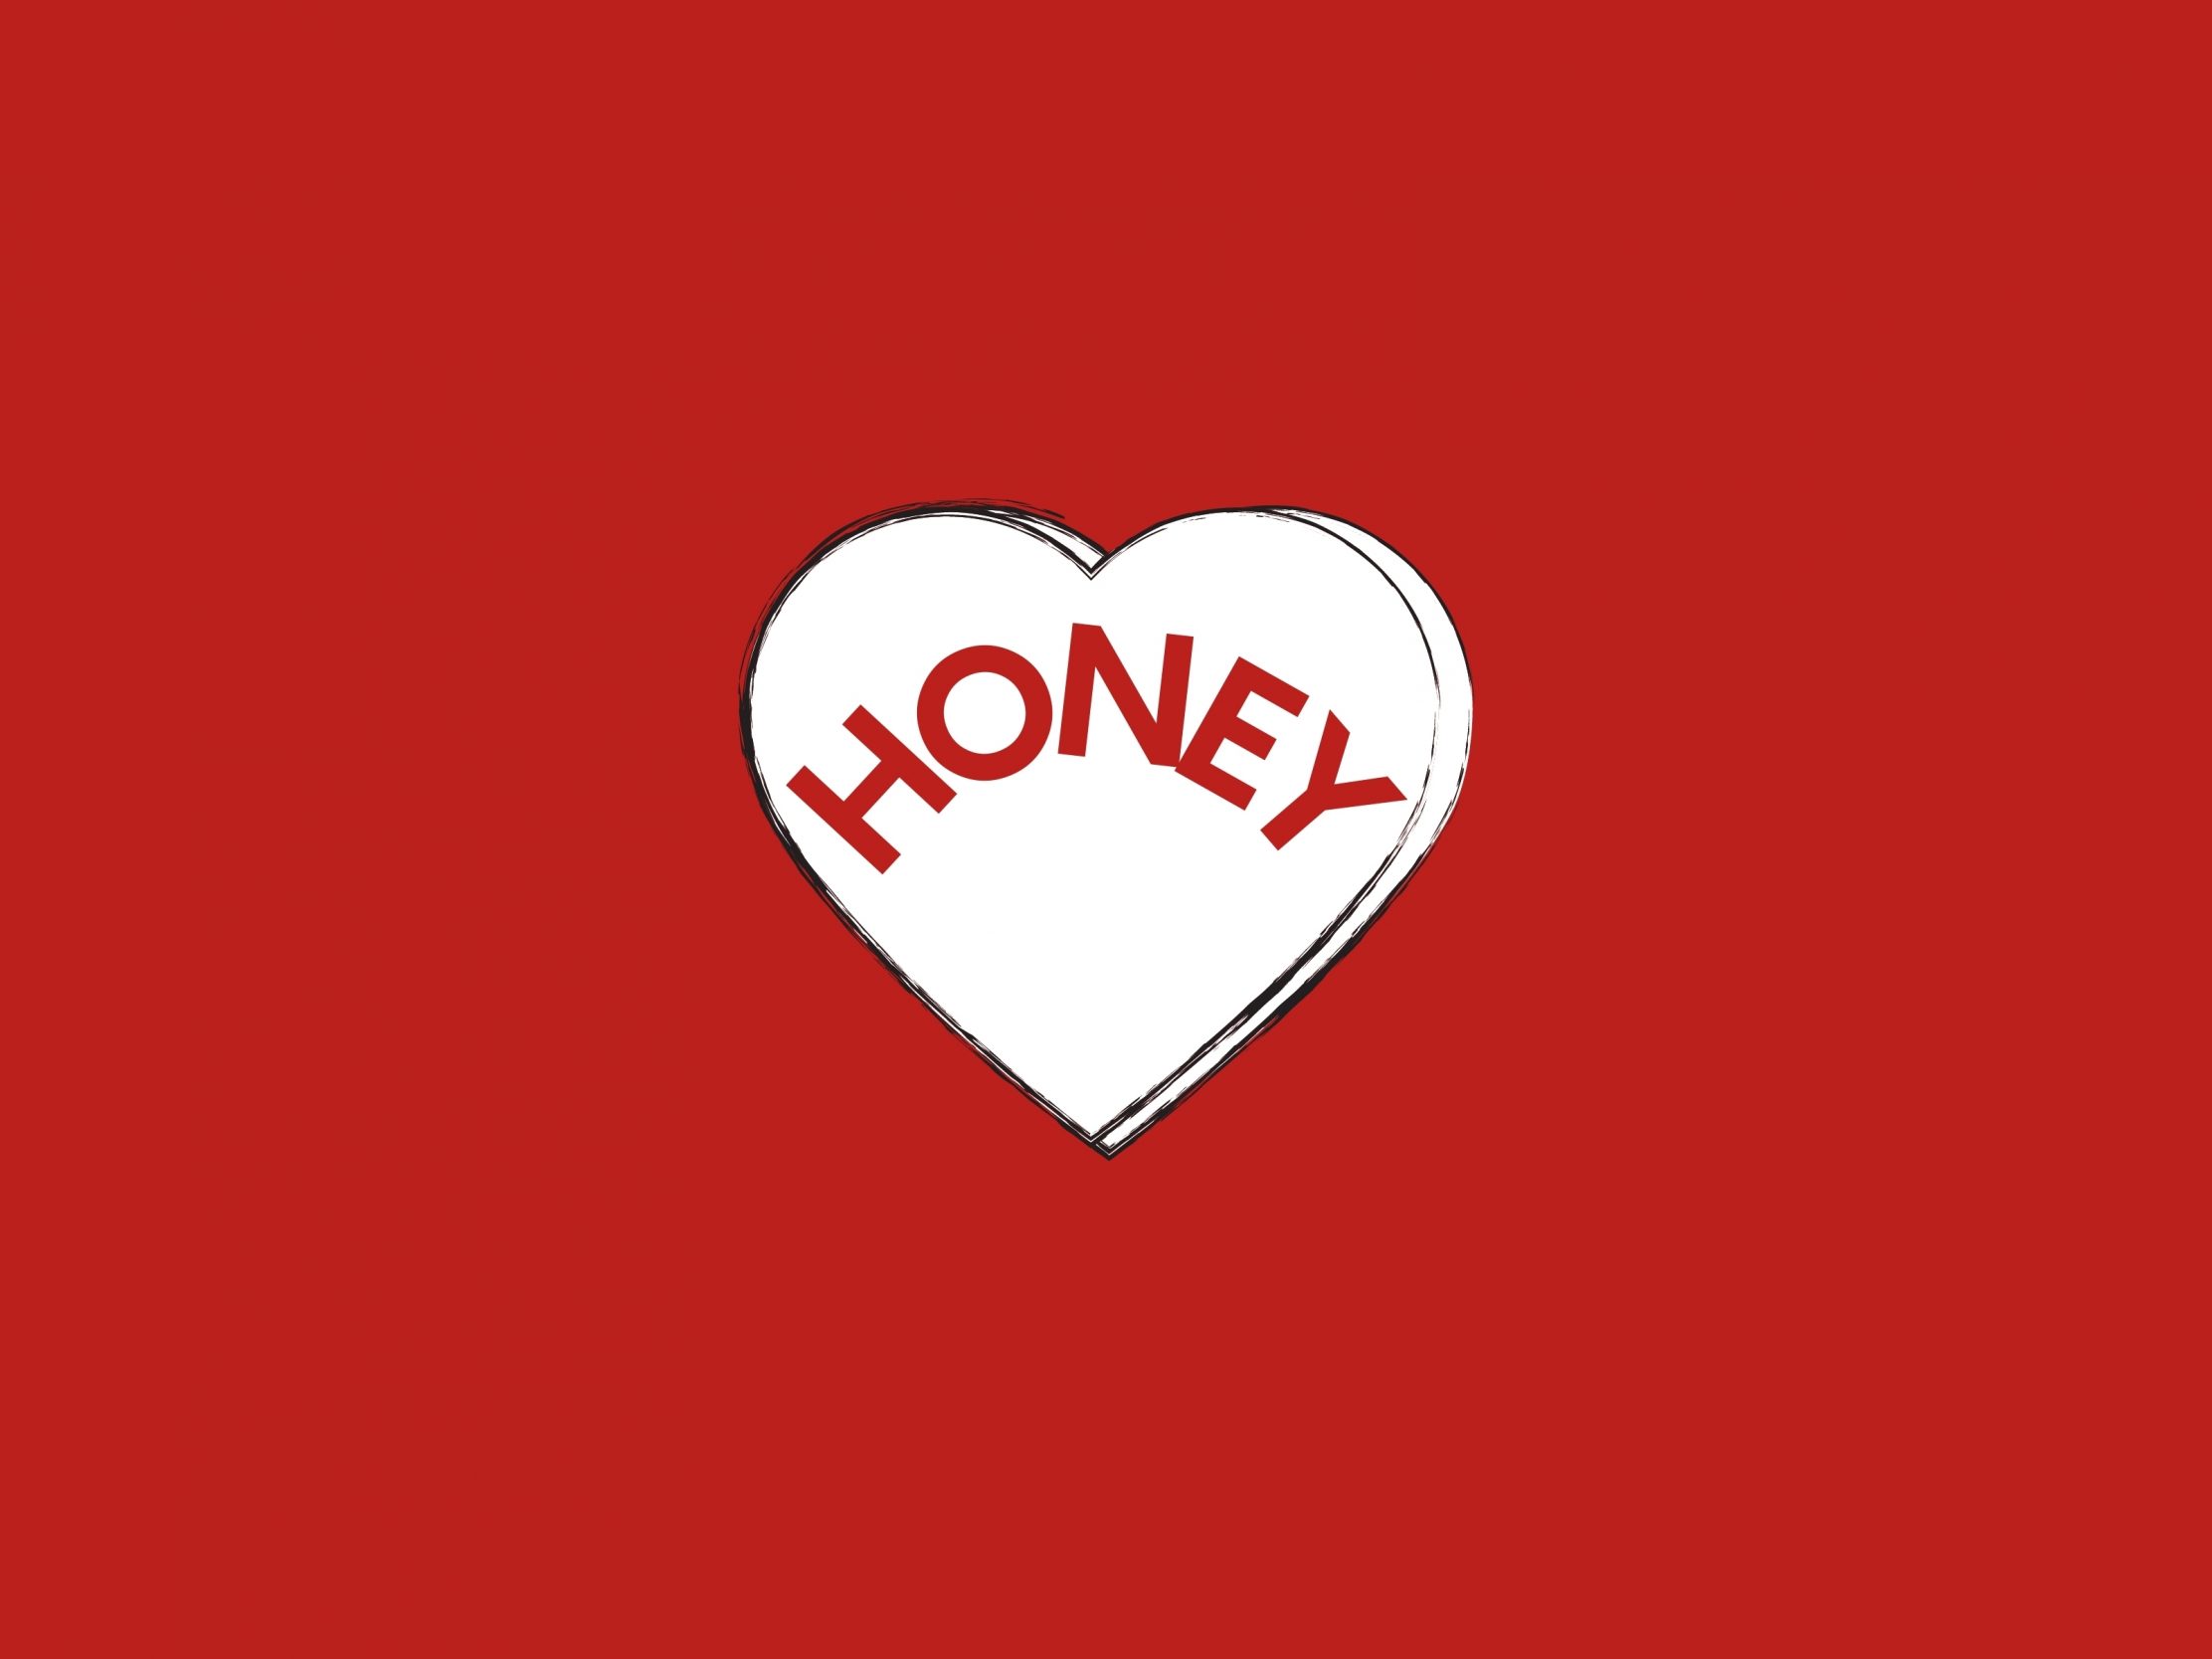 2224x1668 iPad Pro wallpapers Love Heart Honey Valentines Day iPad Wallpaper 2224x1668 pixels resolution